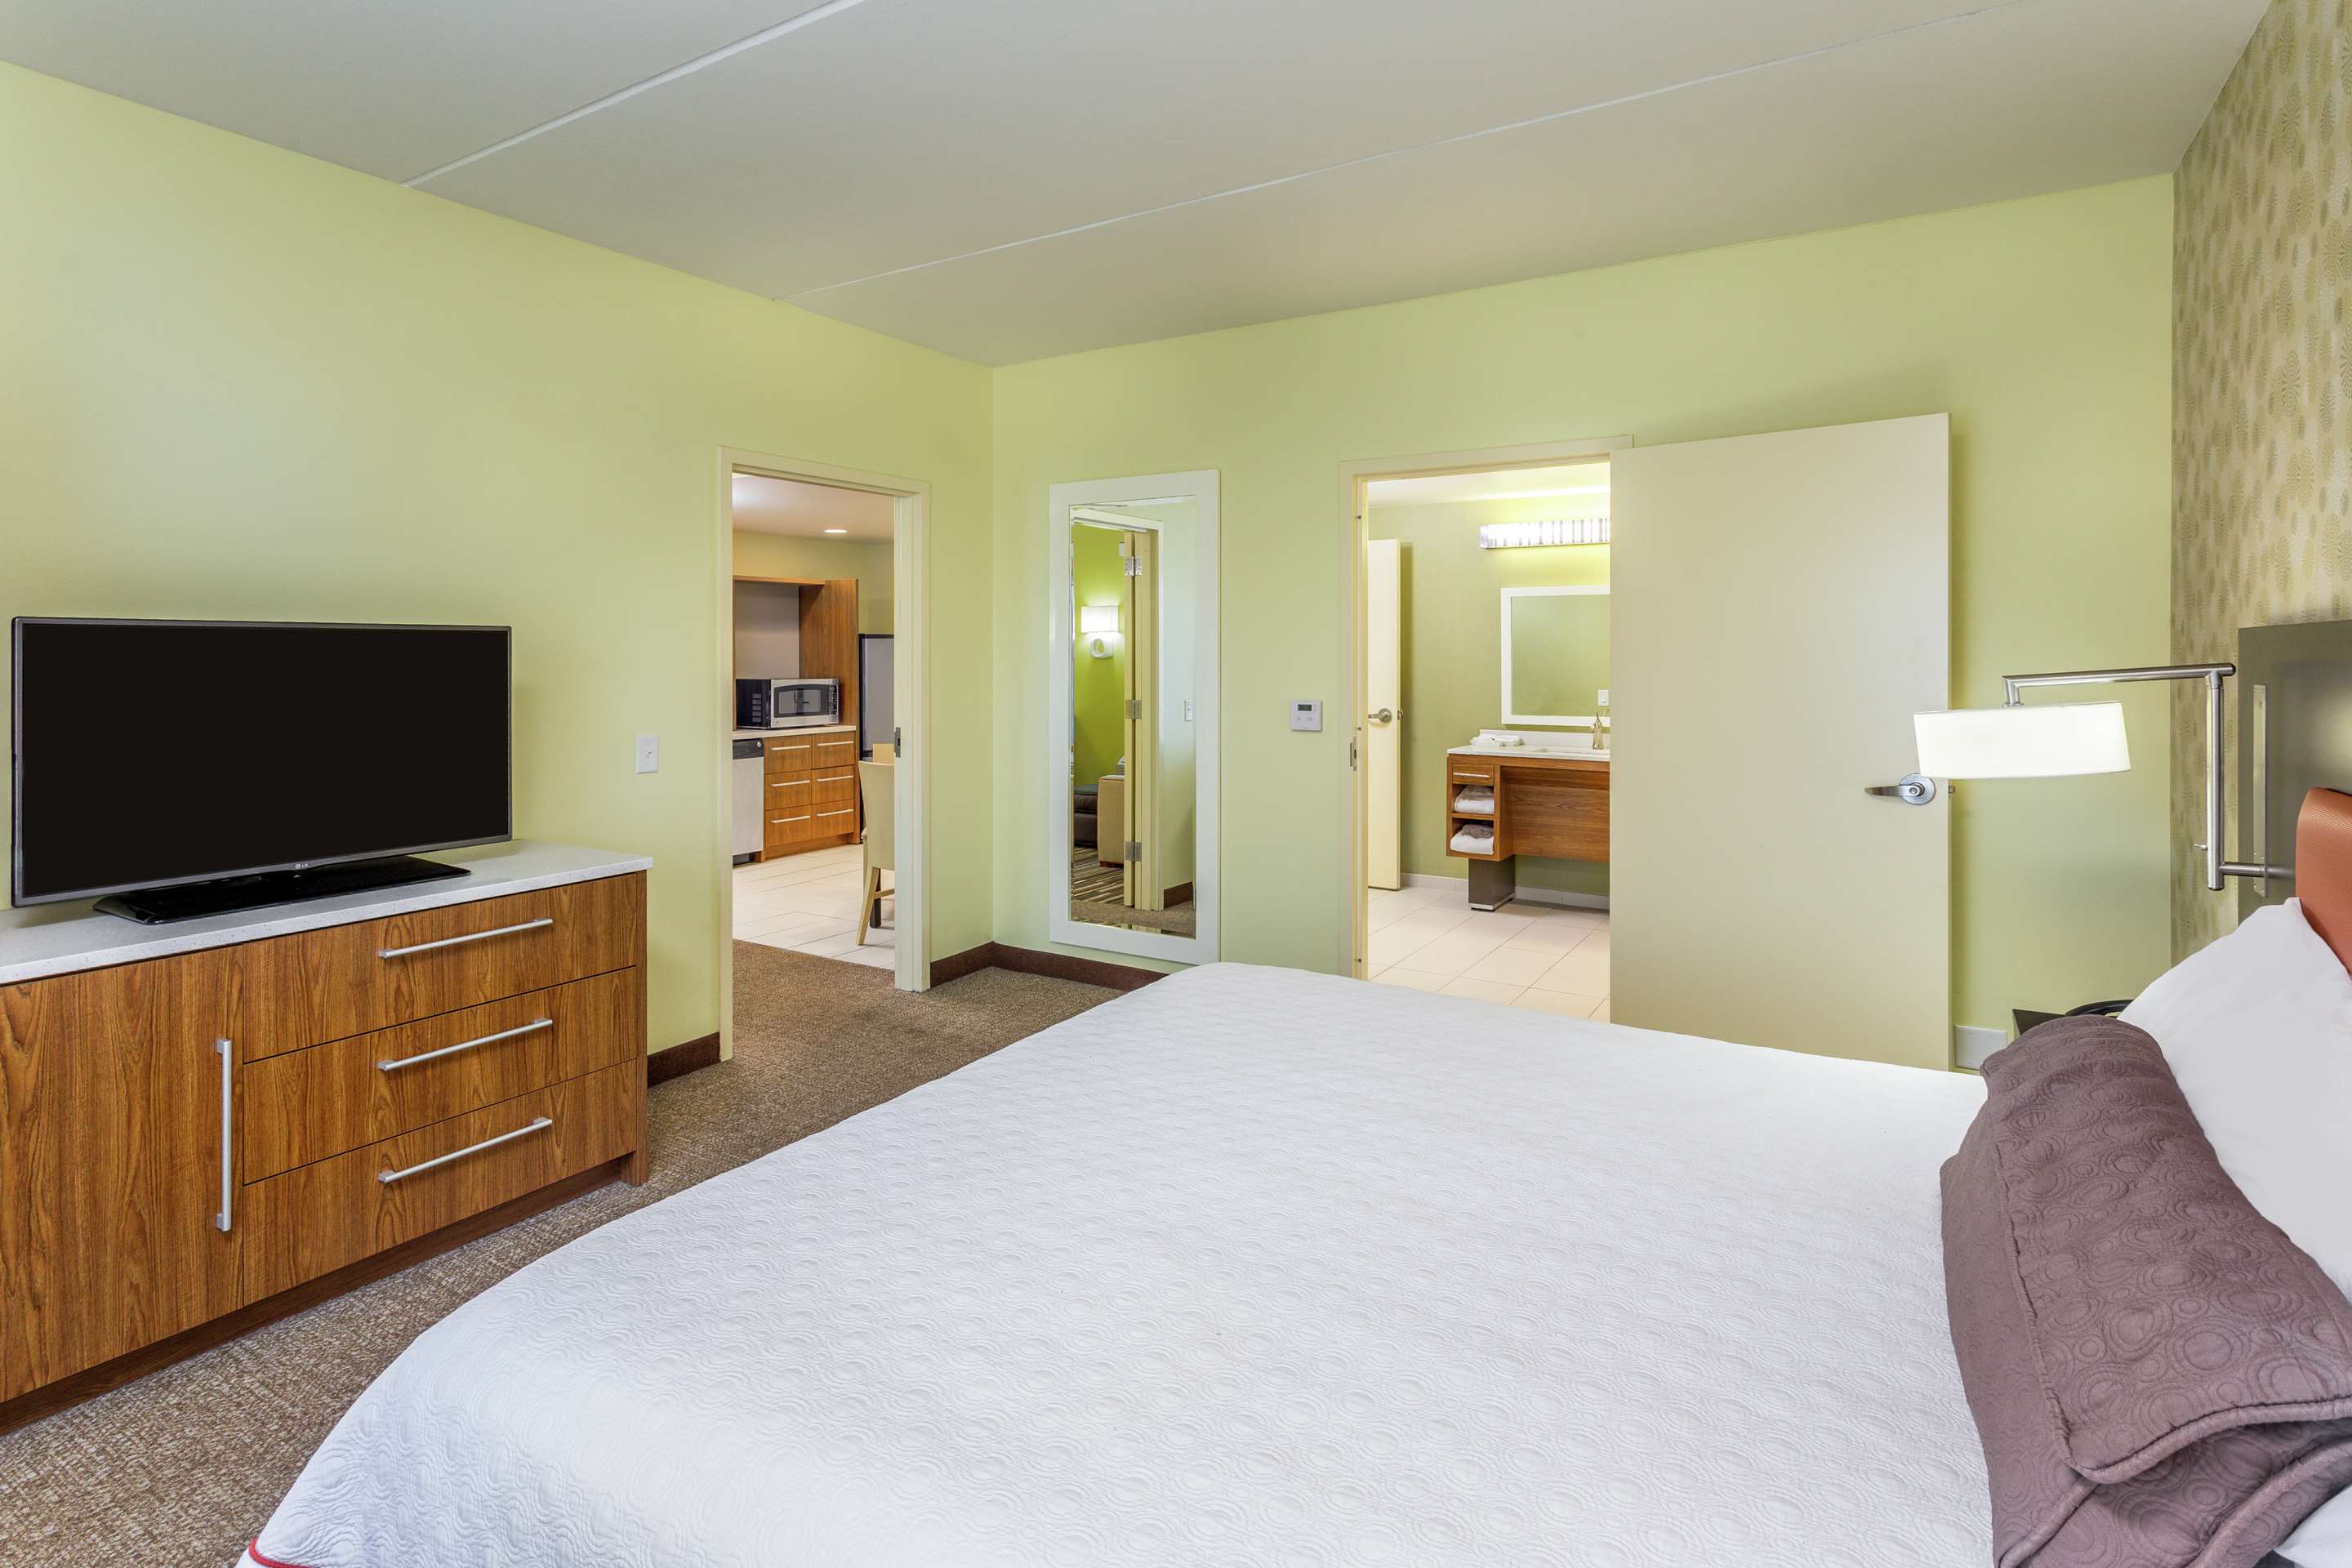 1 King Bed 1 Bedroom Suite3 options